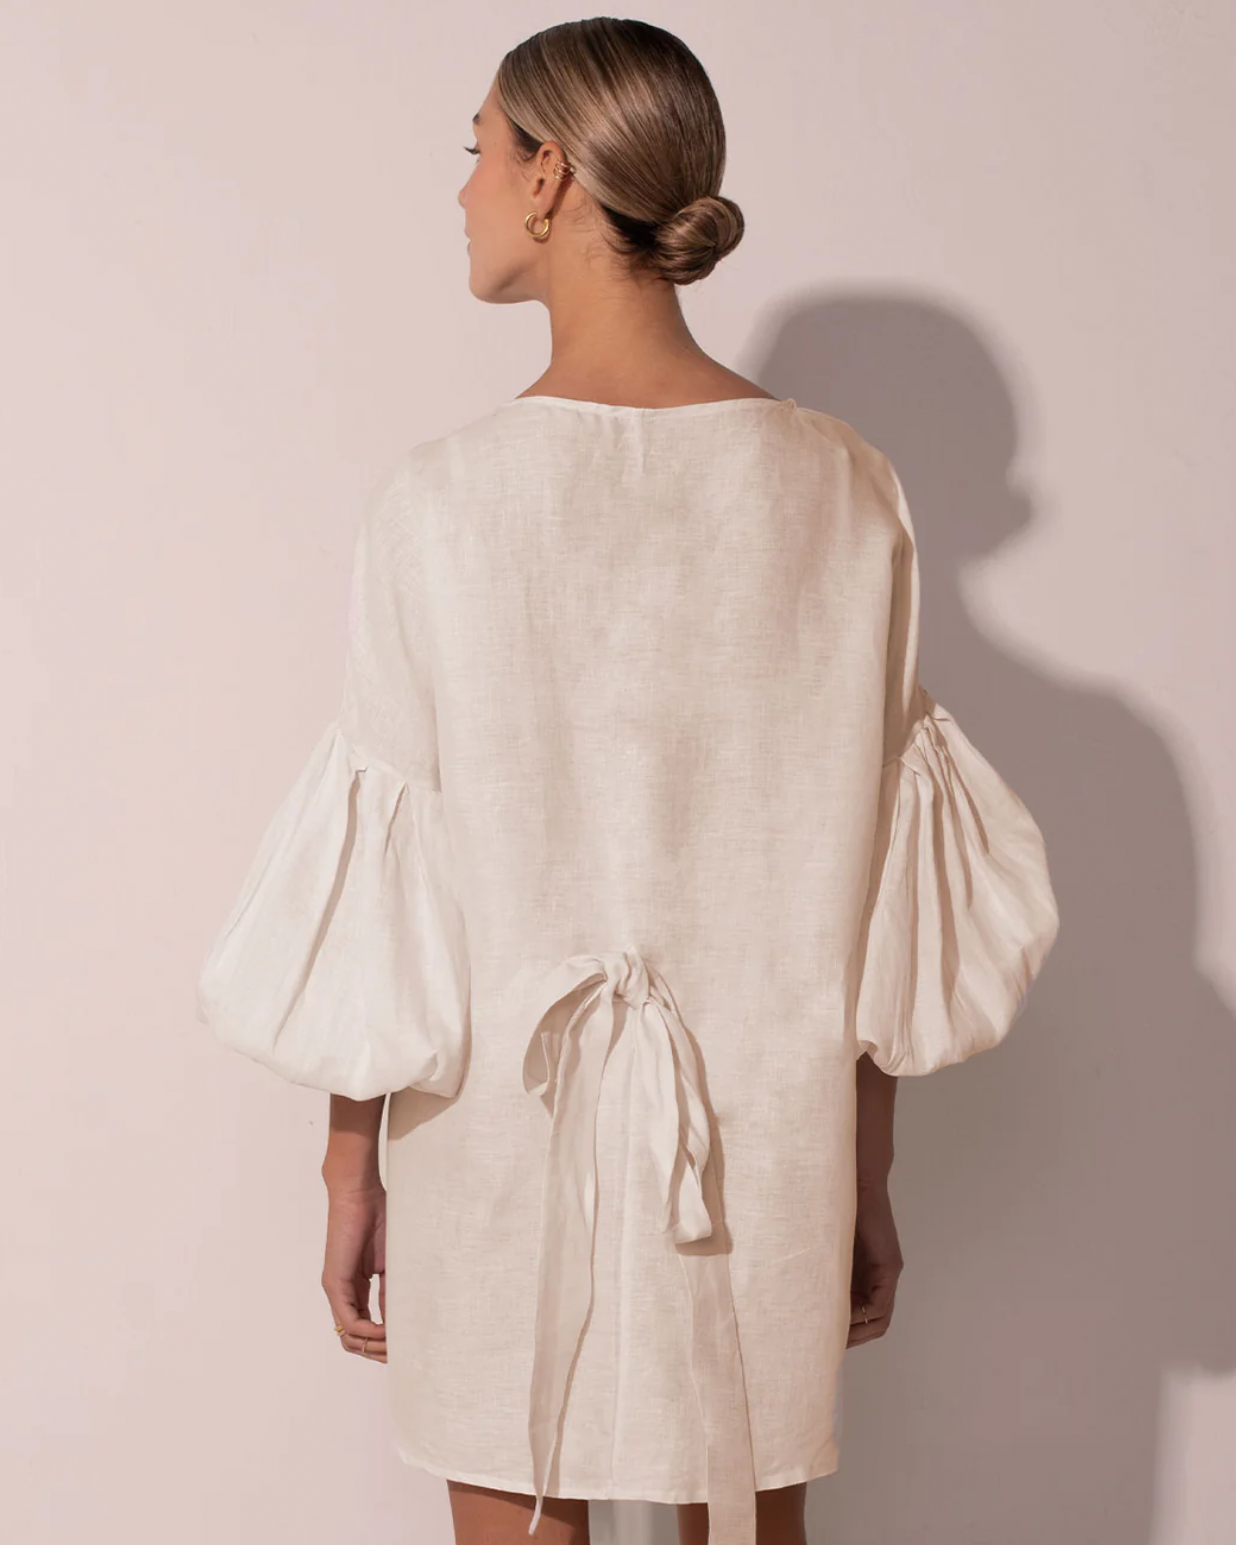 Ancora - Chic Vintage Kimono White